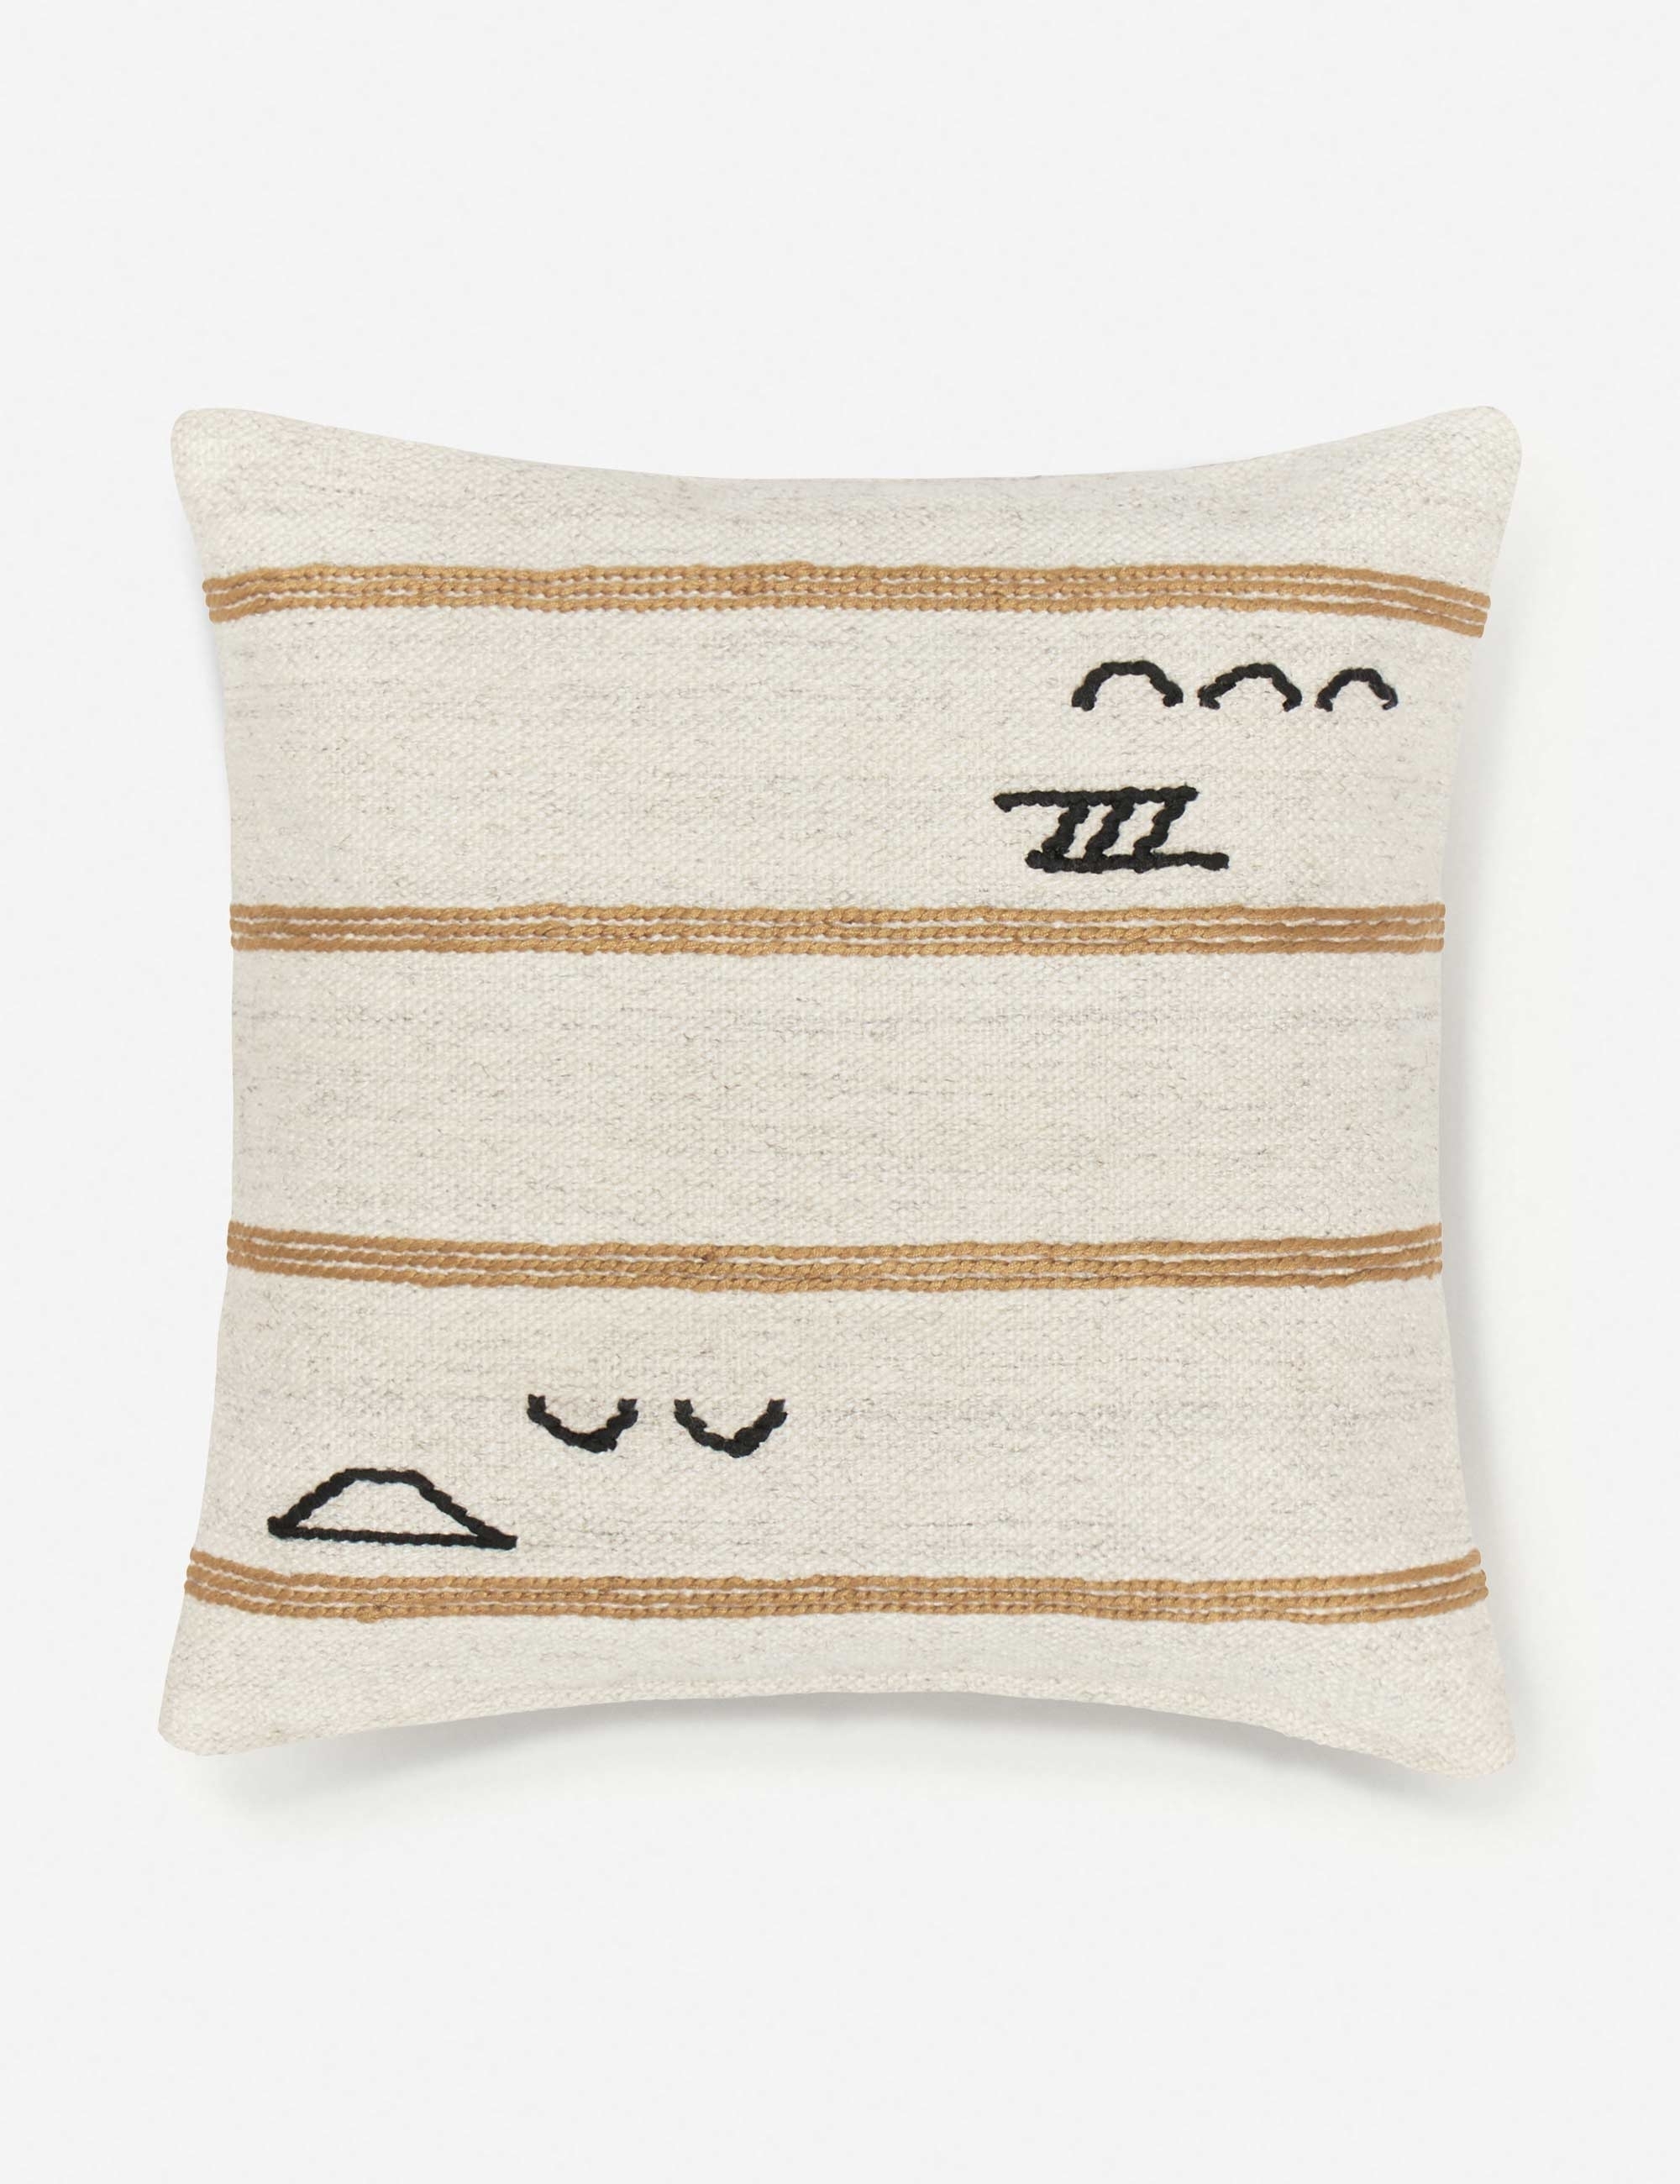 Iconic Stripe Pillow By Sarah Sherman Samuel, 20" x 20" - Image 0